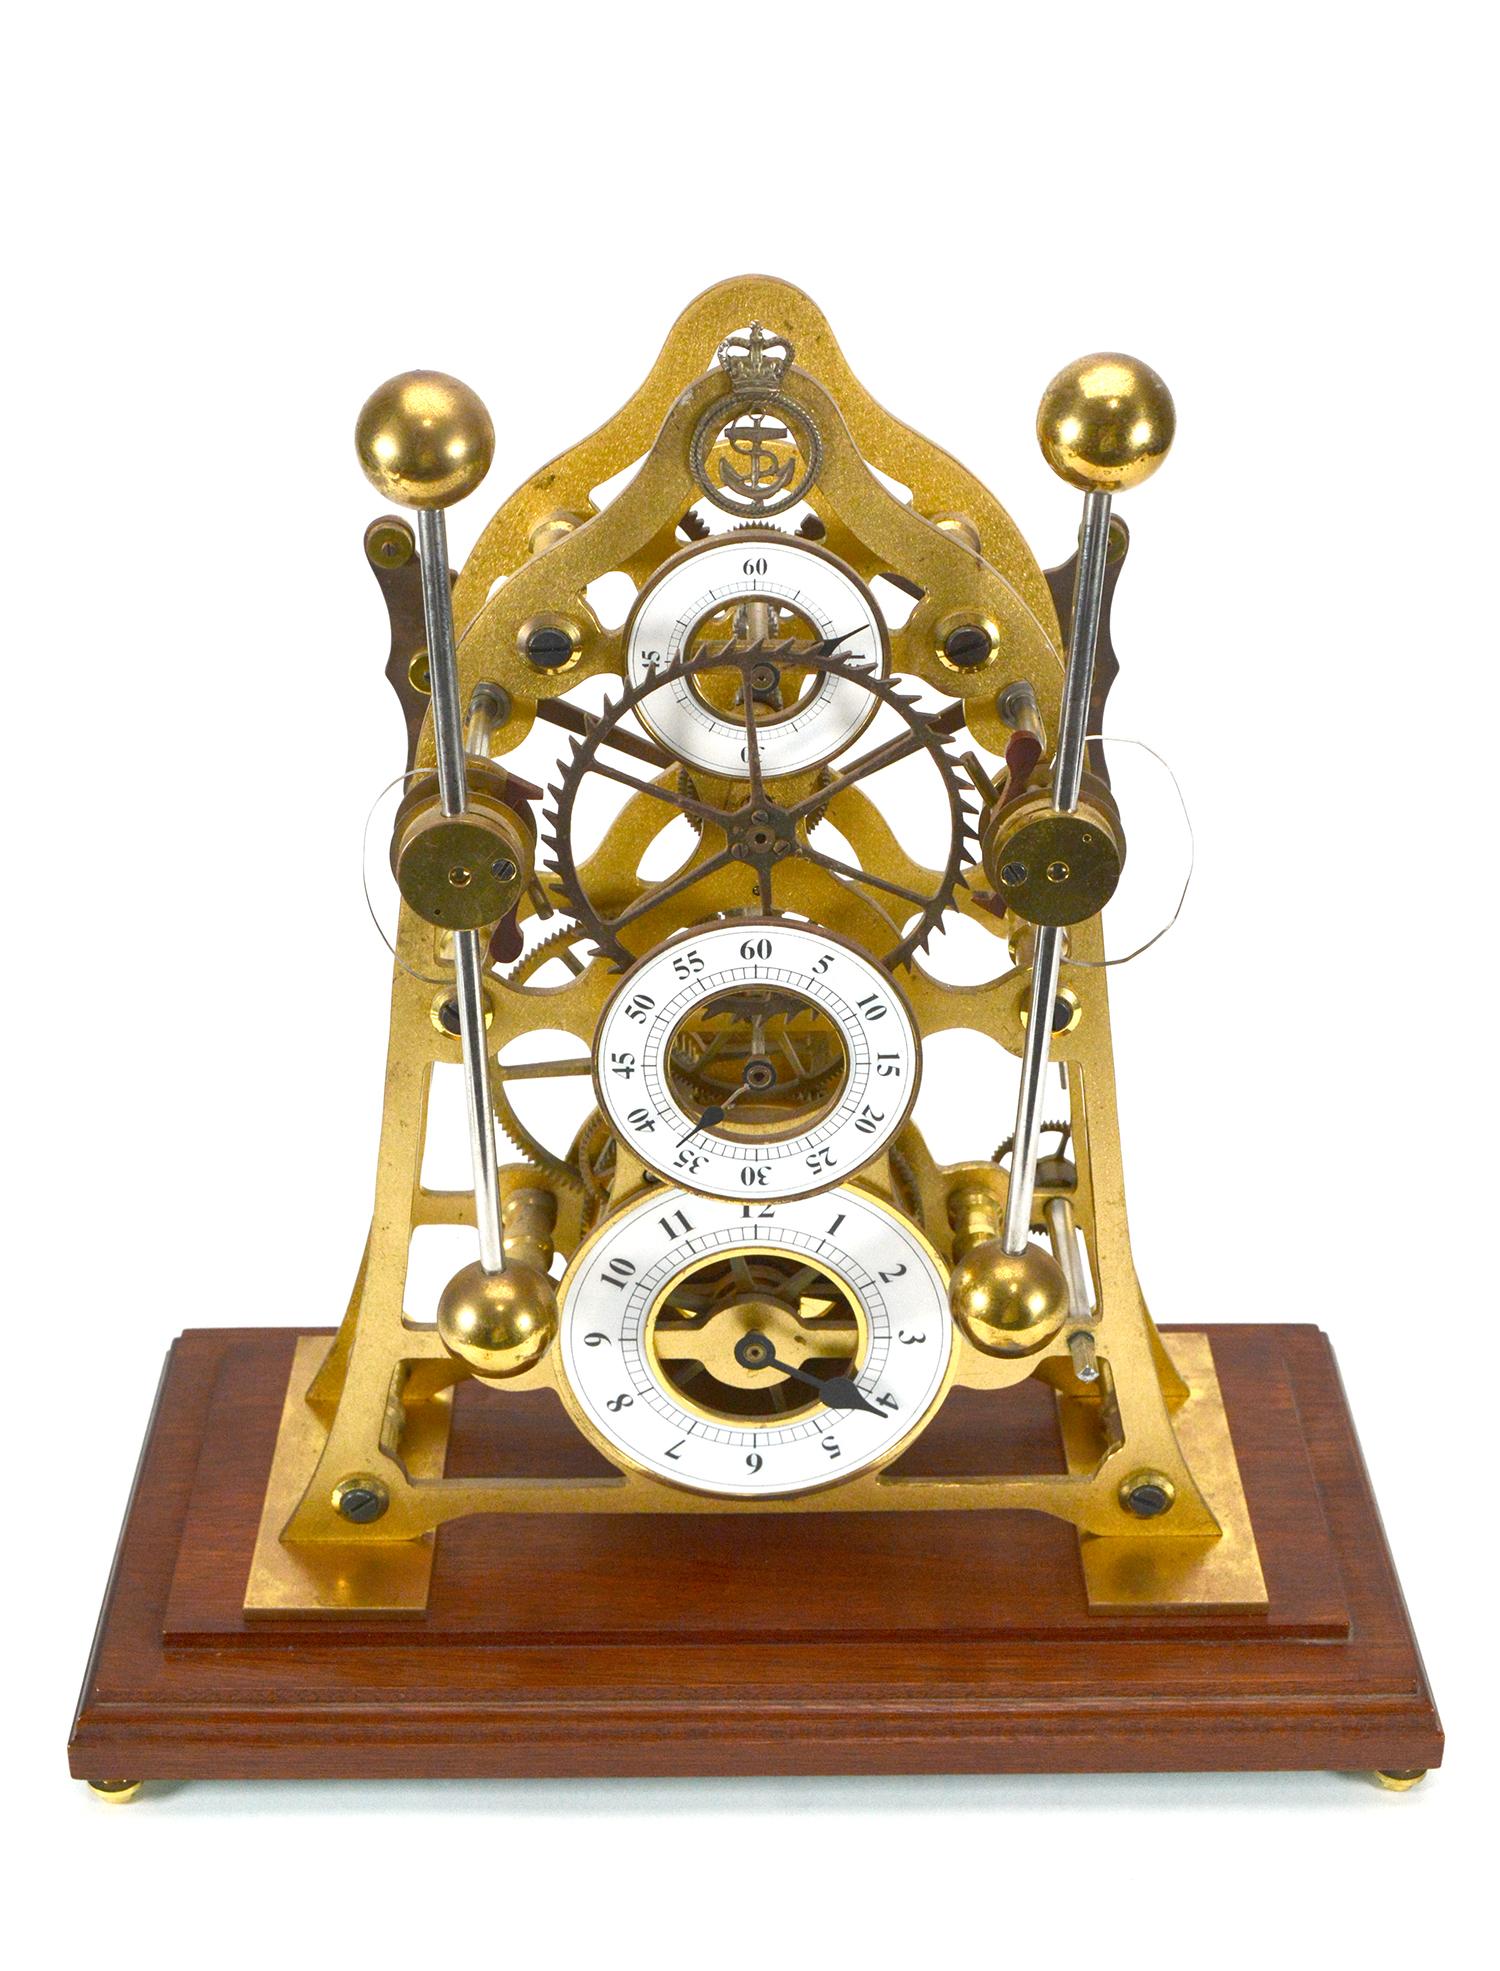 Vintage English Devon Harrison Grasshopper Escapement Double Pendulum Skeleton Sea Clock

MOVEMENT: 8 day wind up mechanism

FUNCTION: time only

SIZE: 16